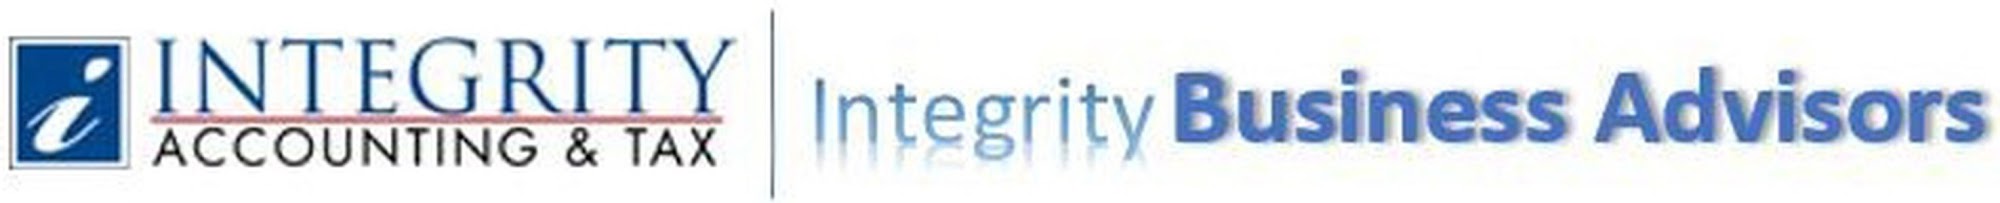 Integrity Accounting & Tax, LLC 121 E Centennial Dr, Zillah Washington 98953